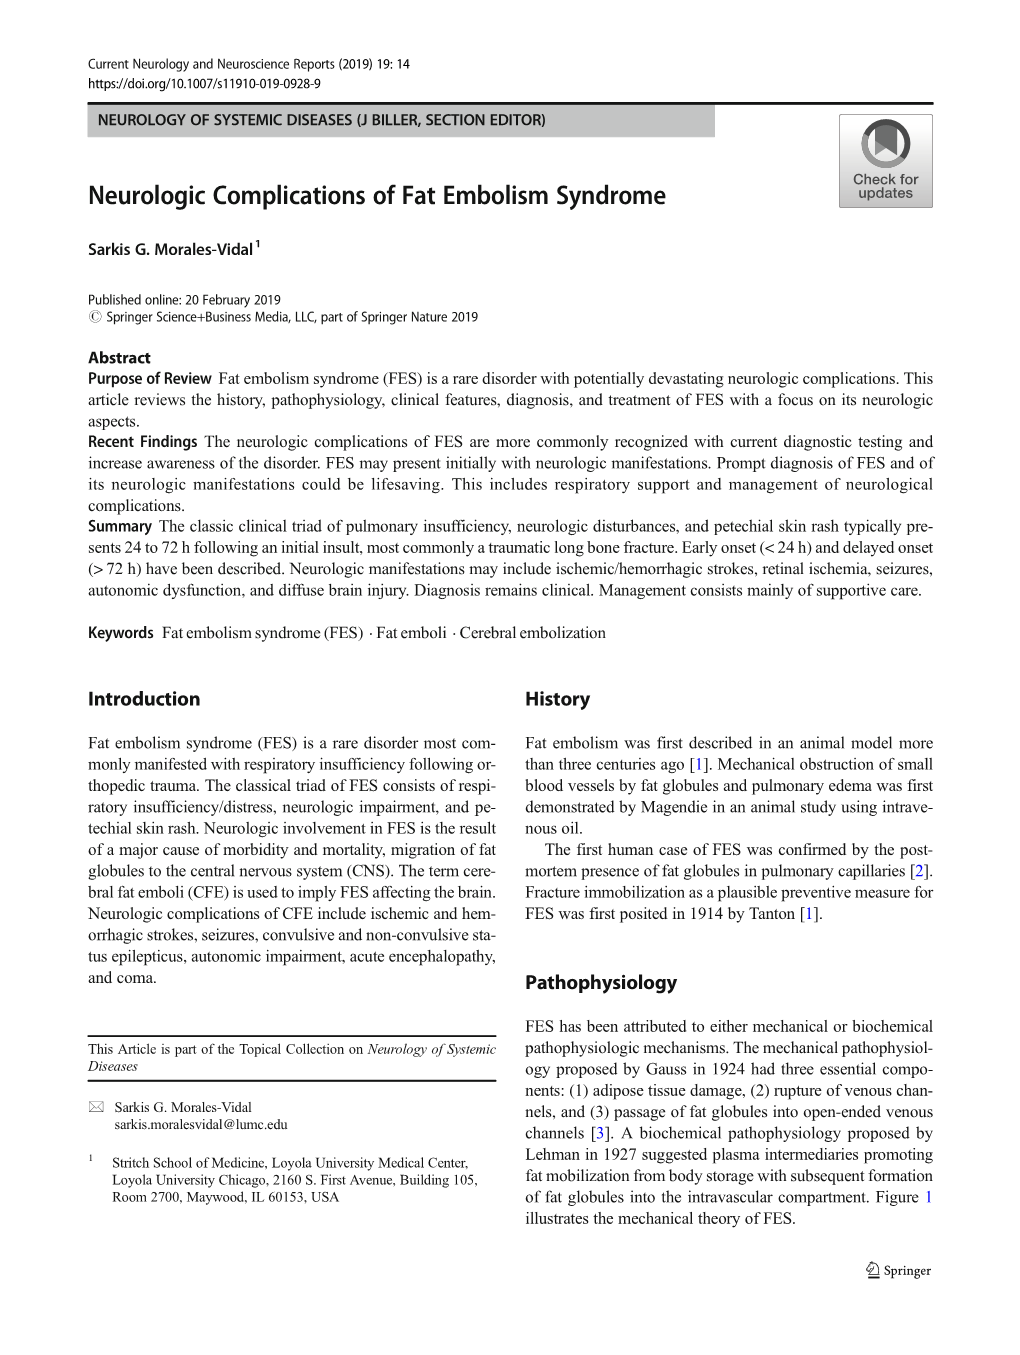 Neurologic Complications of Fat Embolism Syndrome